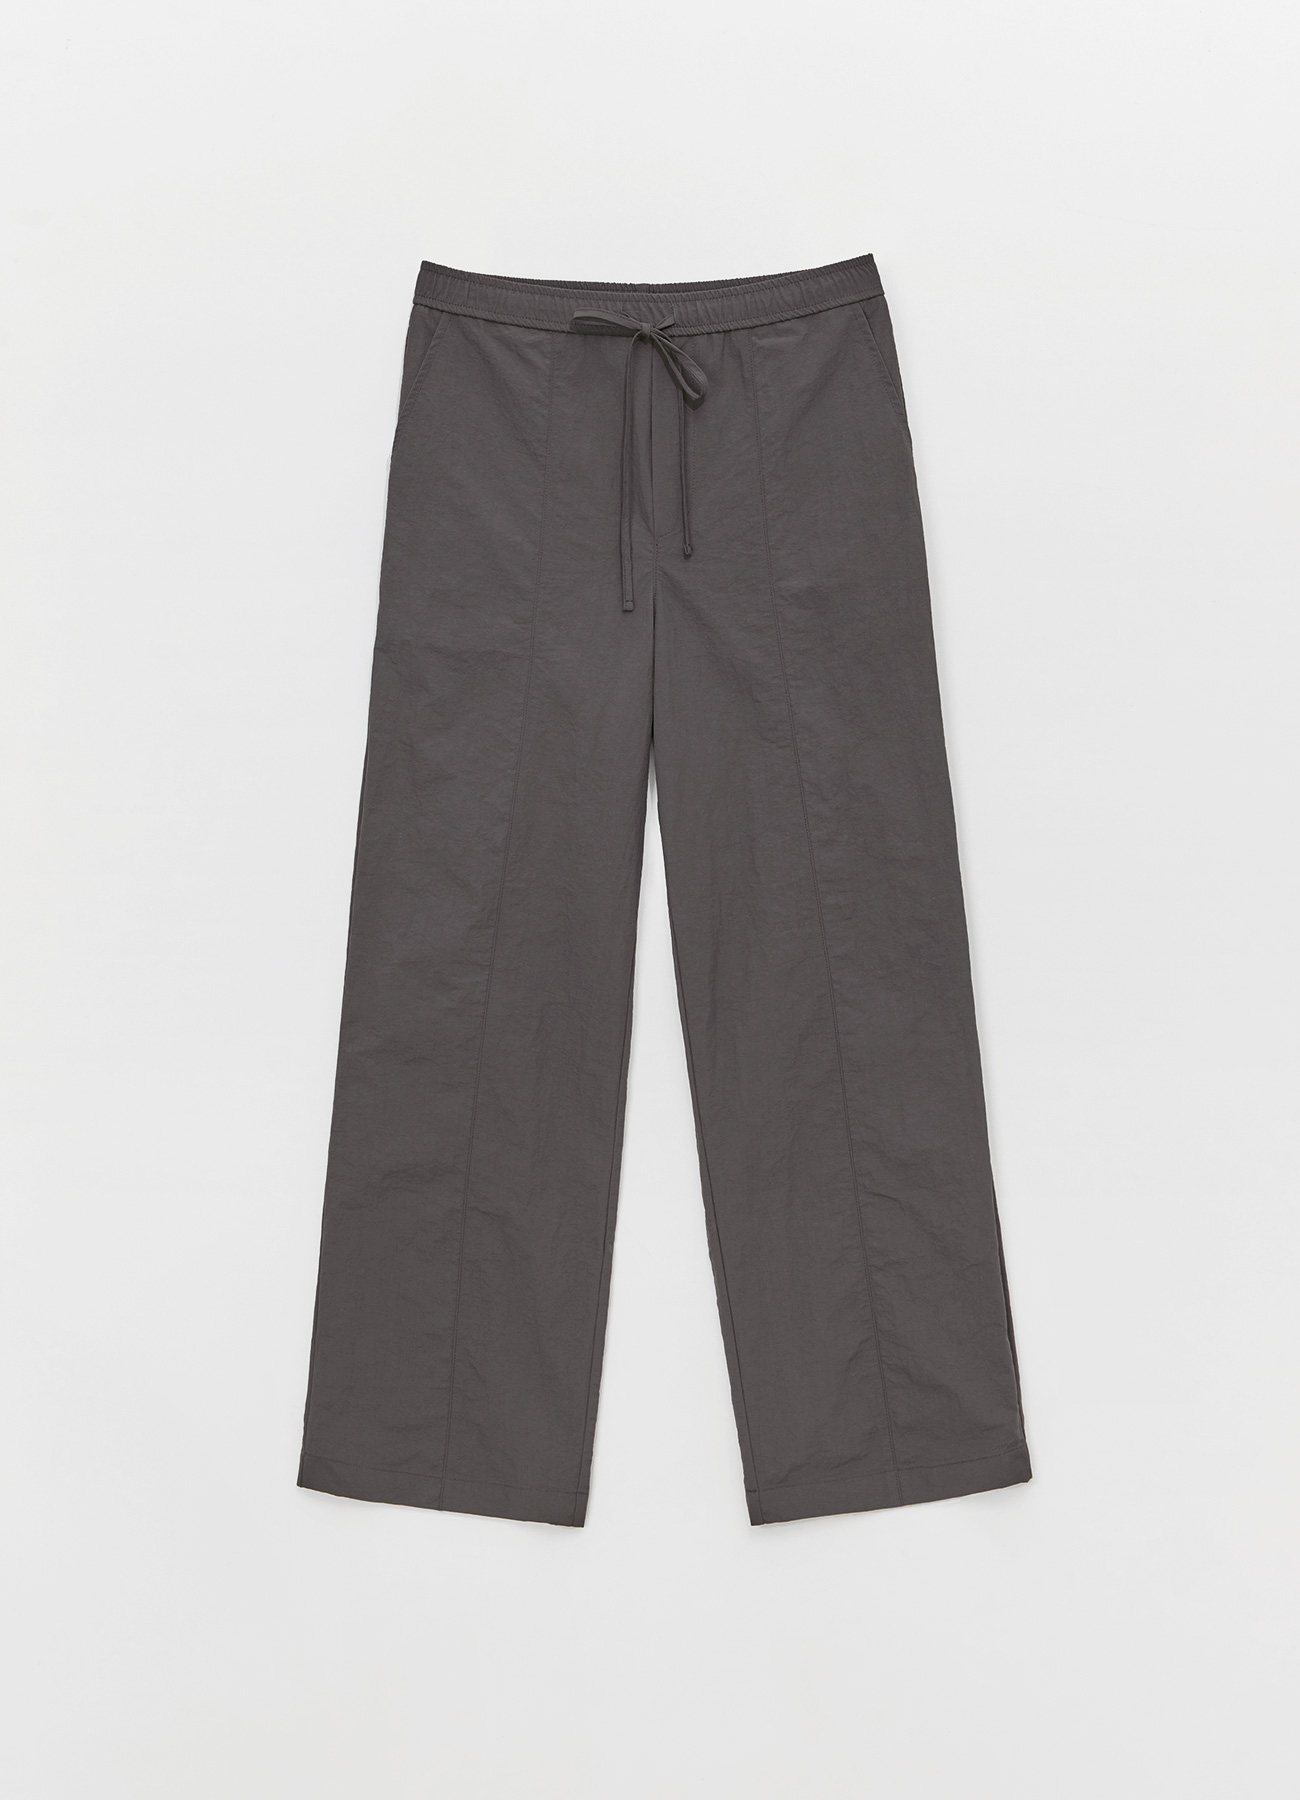 Charcoal Parachute Pants - Dearish